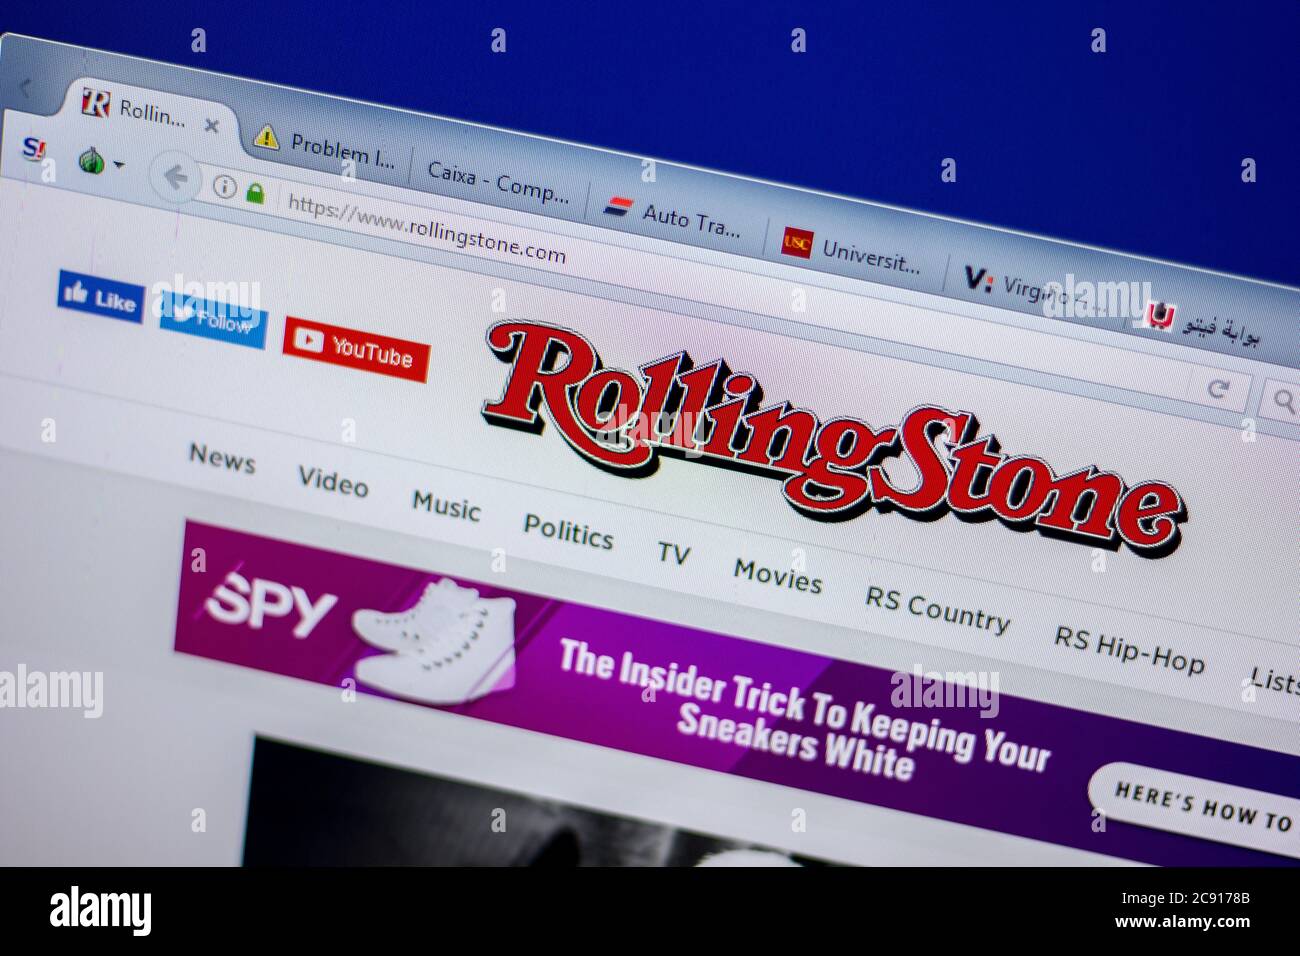 Ryazan, Russia - June 05, 2018: Homepage of RollingStone website on the display of PC, url - RollingStone.com Stock Photo